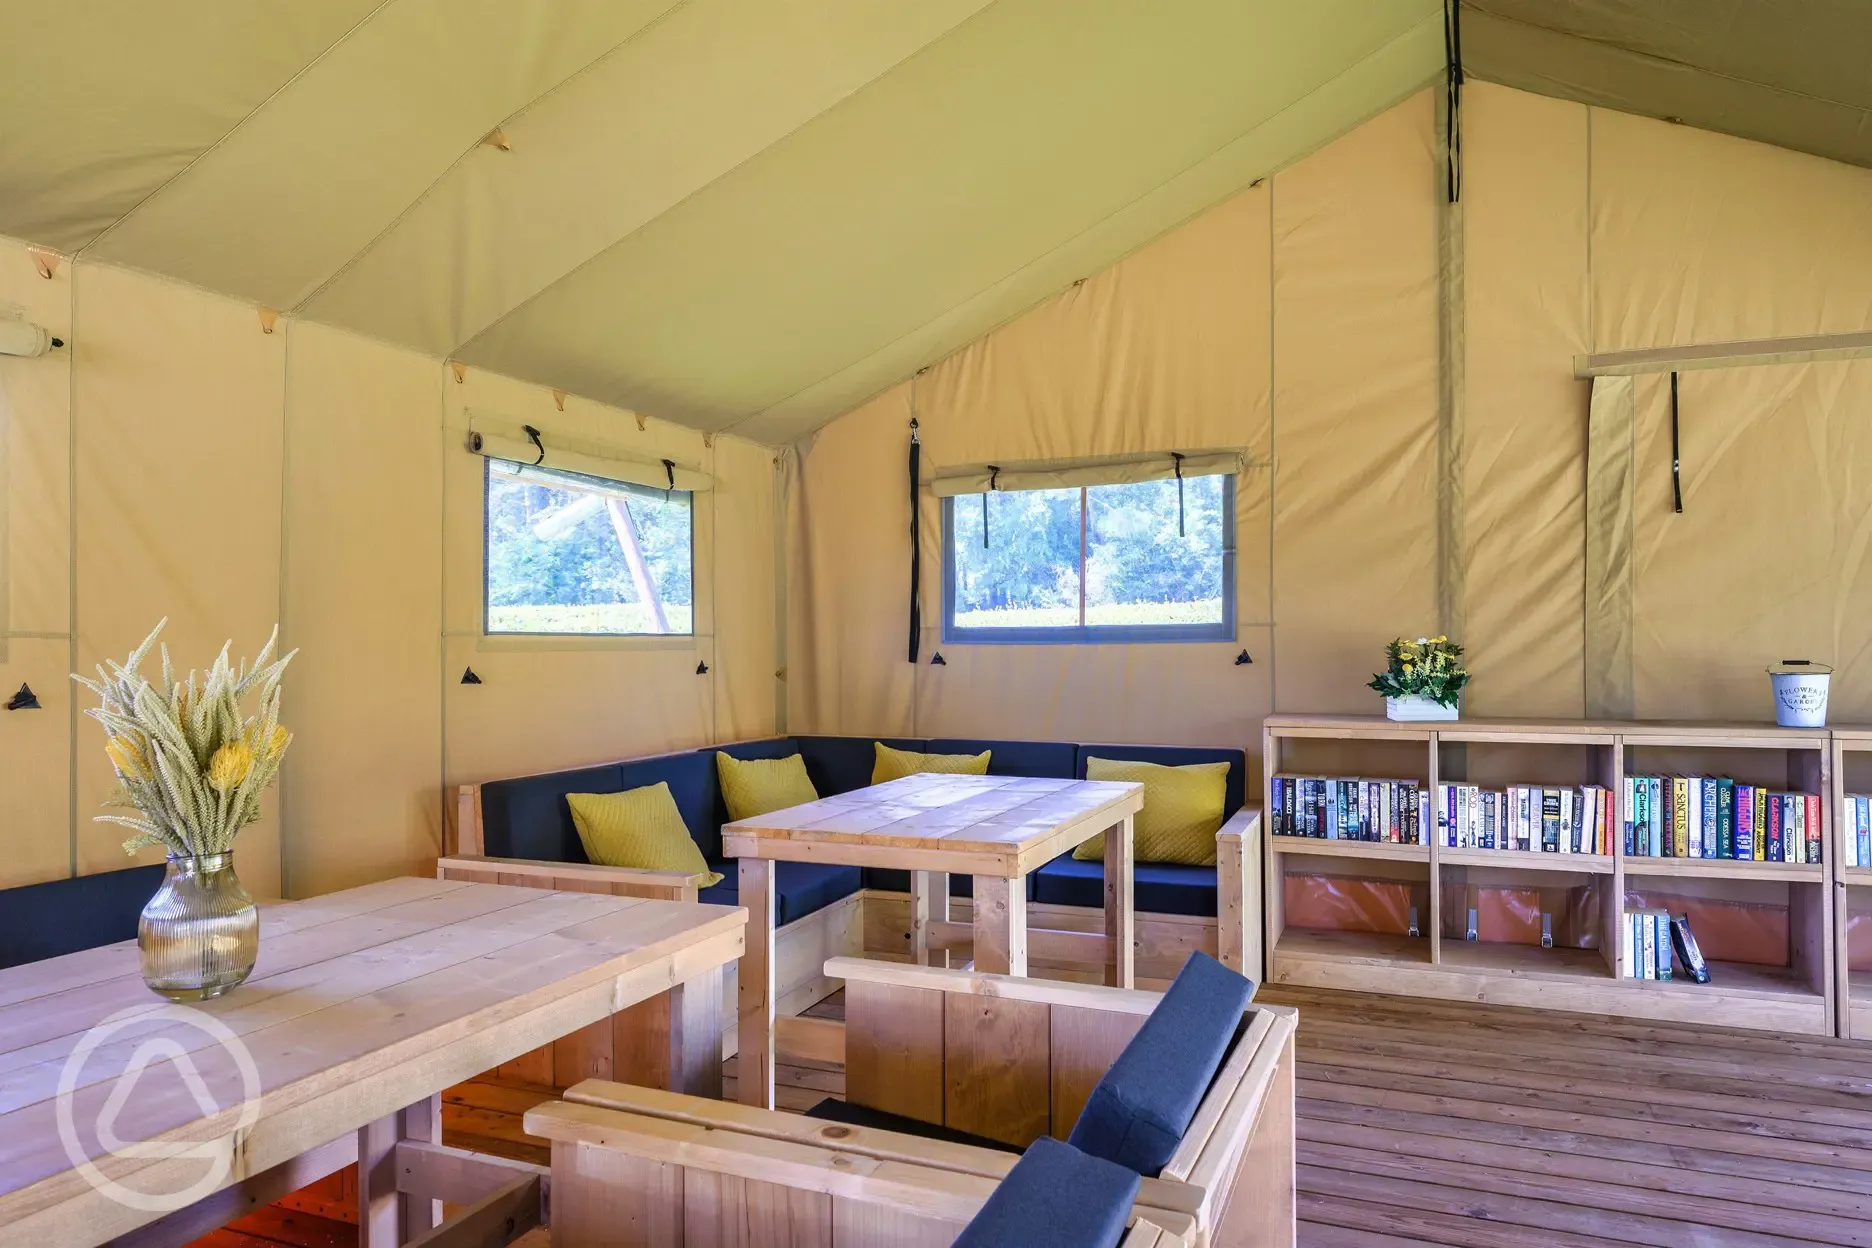 Communal safari tent lounge area